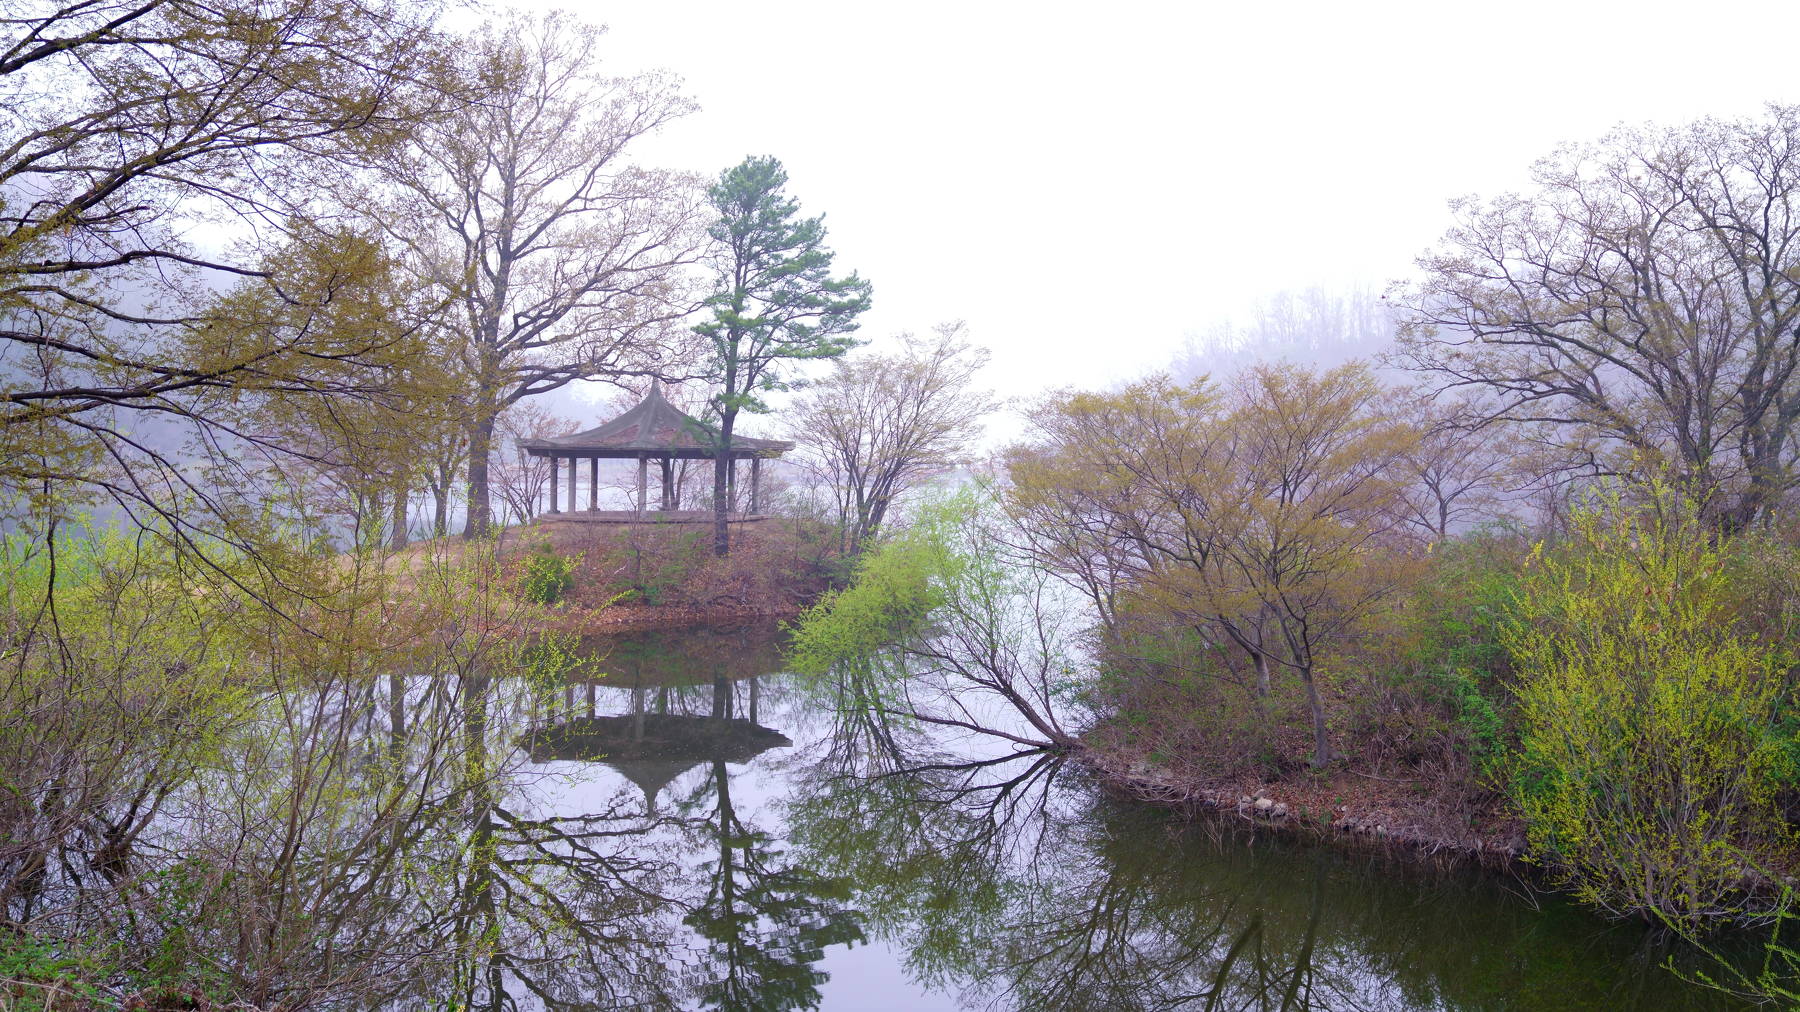 south korea, choongcheongnamdo, spring, springtime, lake, tree, fog, new leaves, reflection, octagoral, morning, Shin